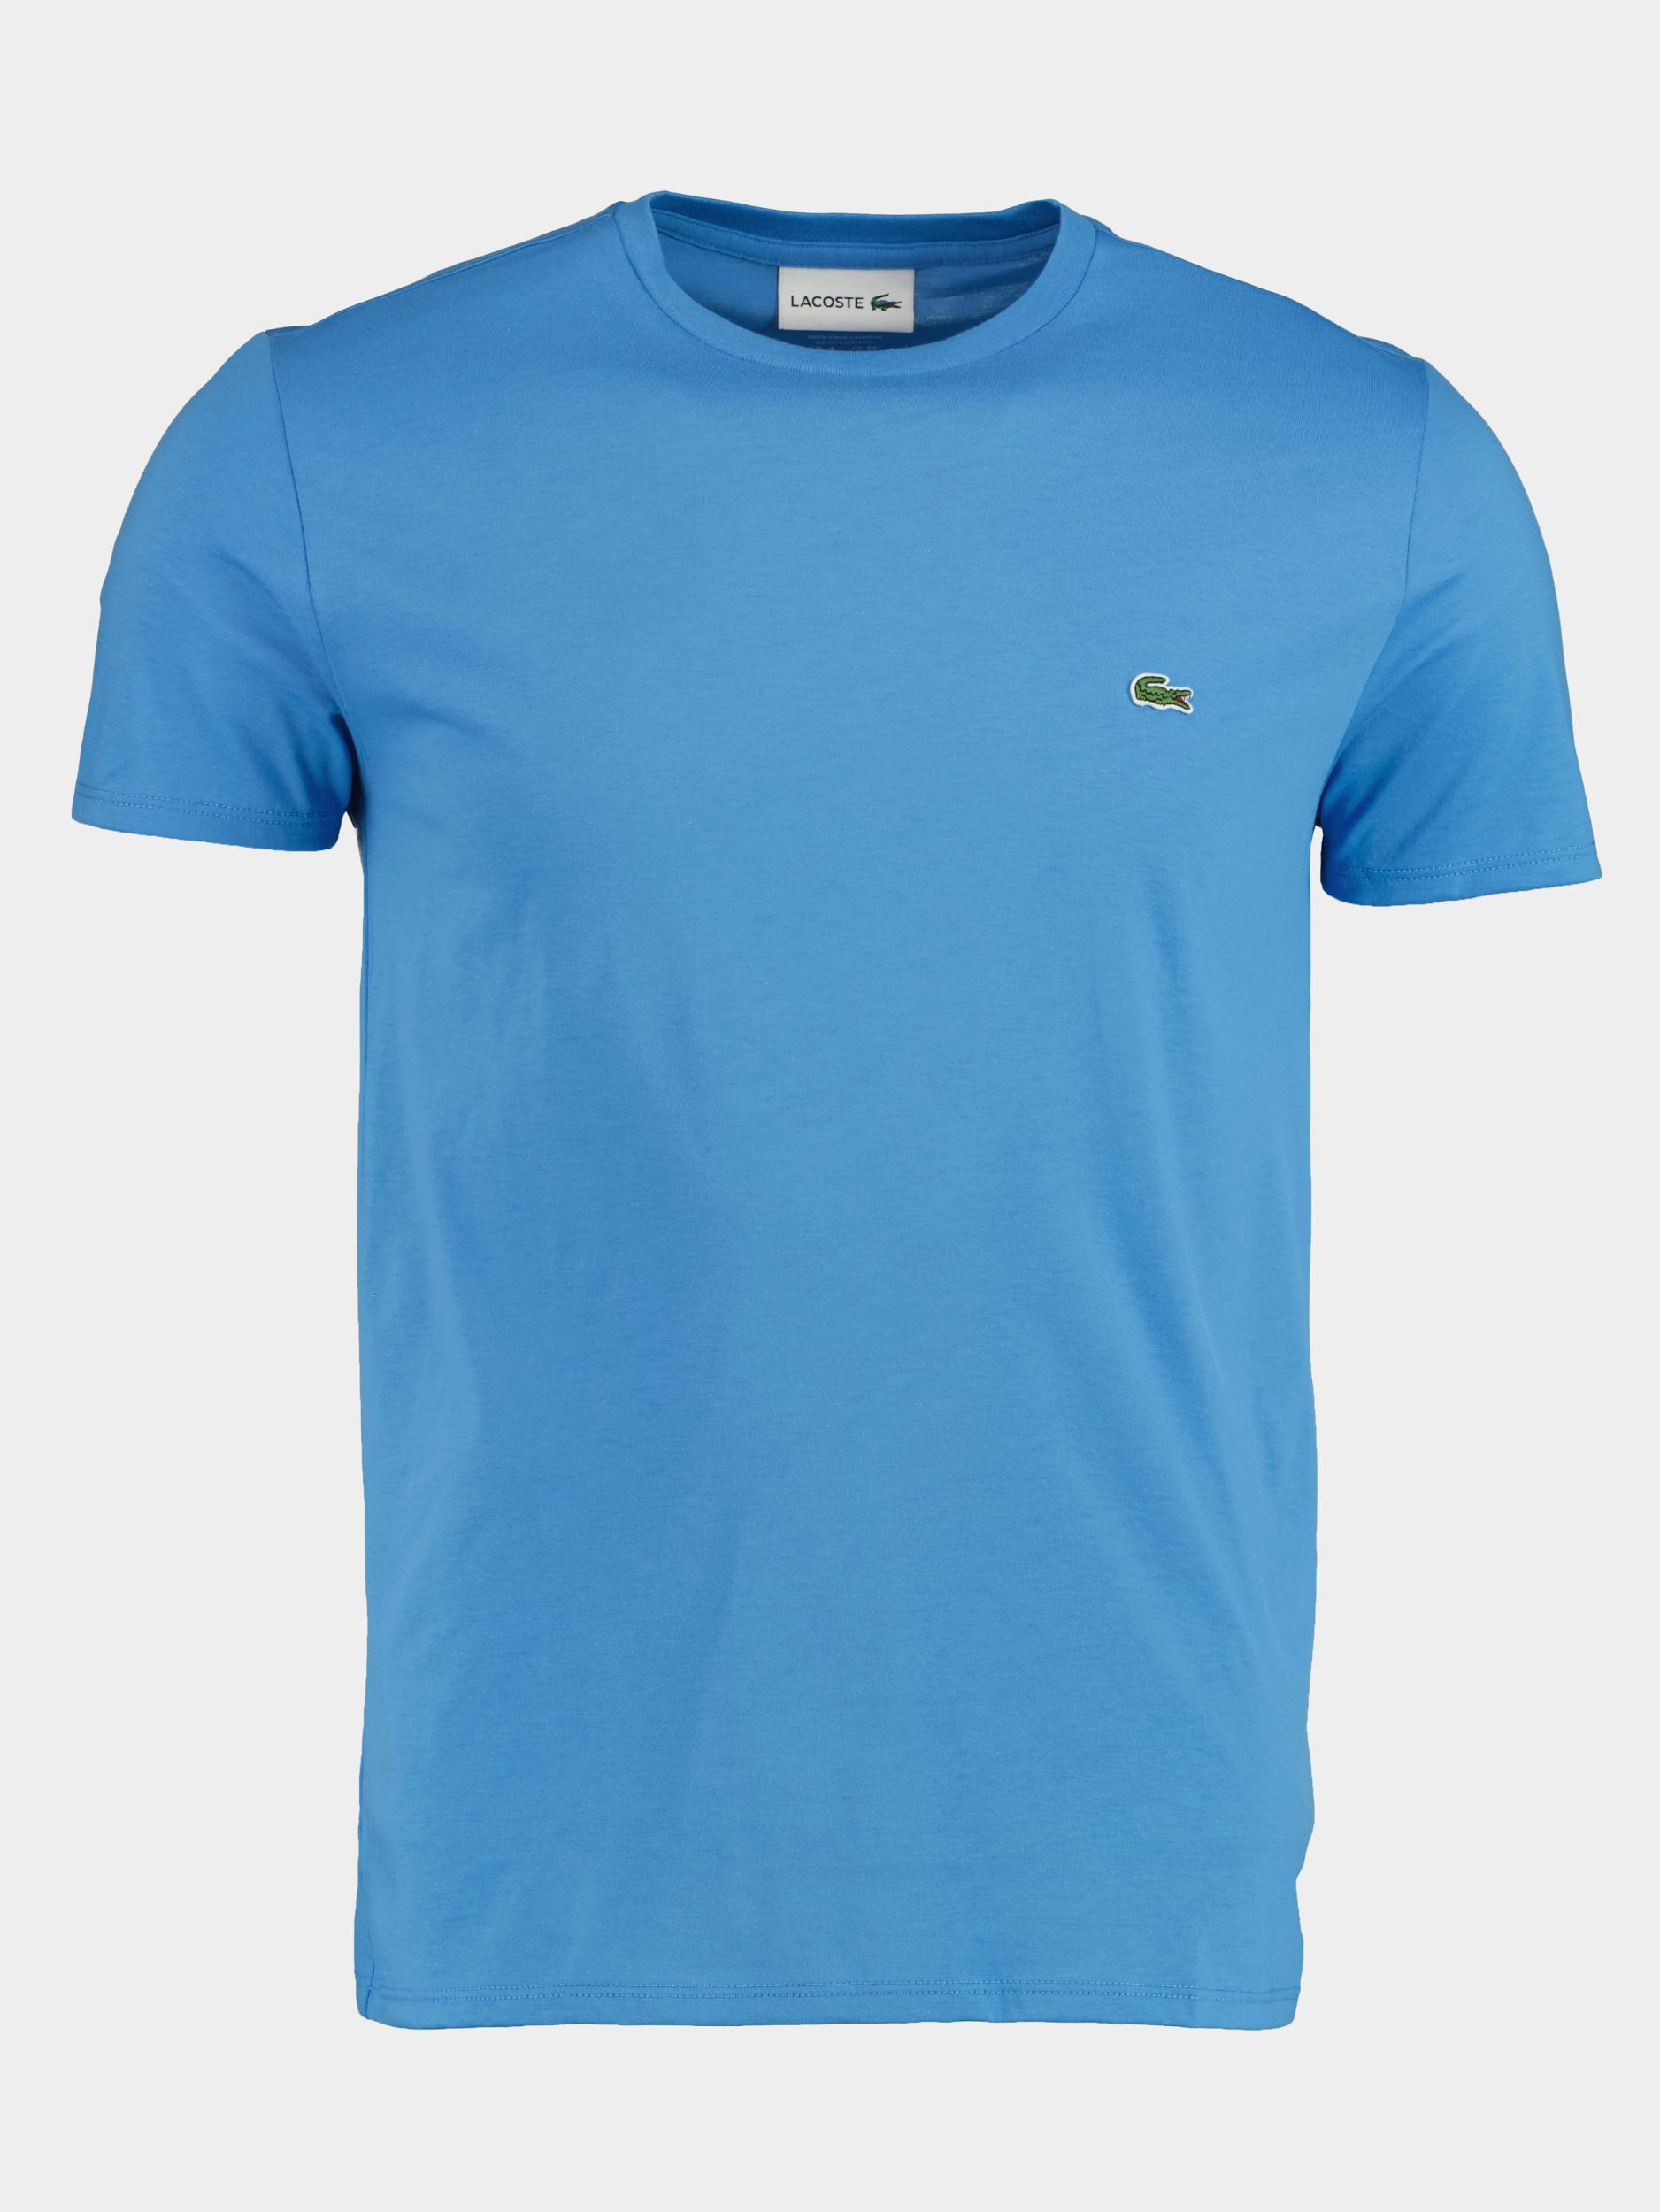 Lacoste T-shirt korte mouw Blauw  TH6709/L99